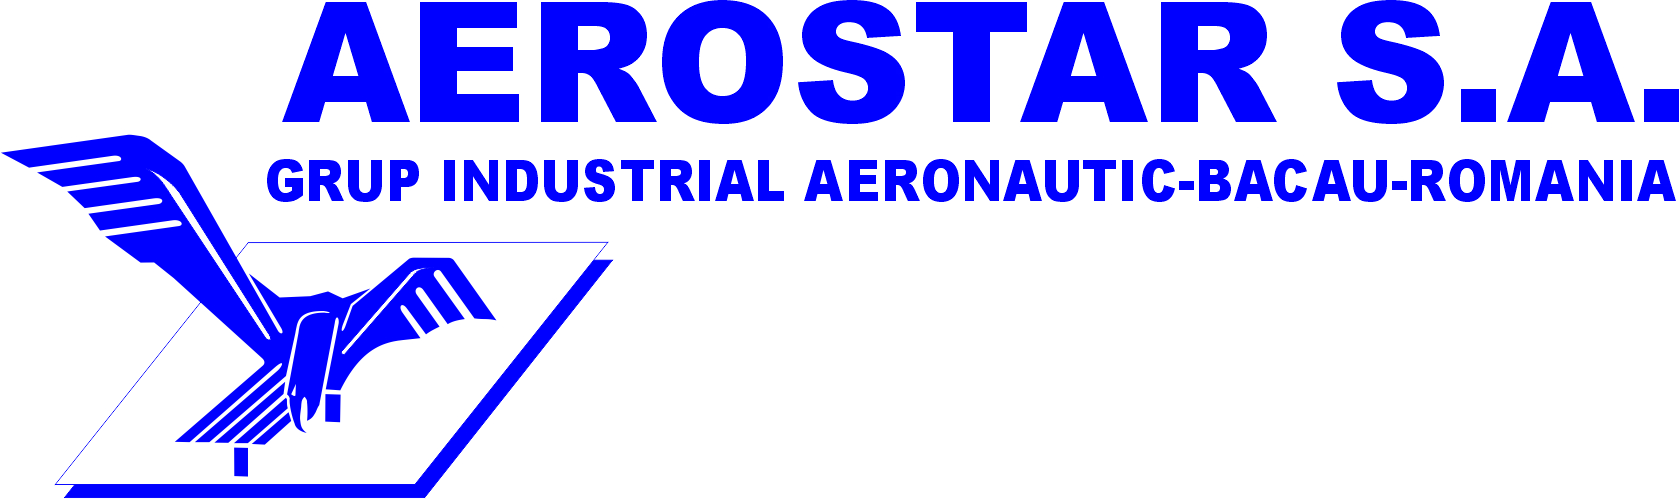 aerostar-logo